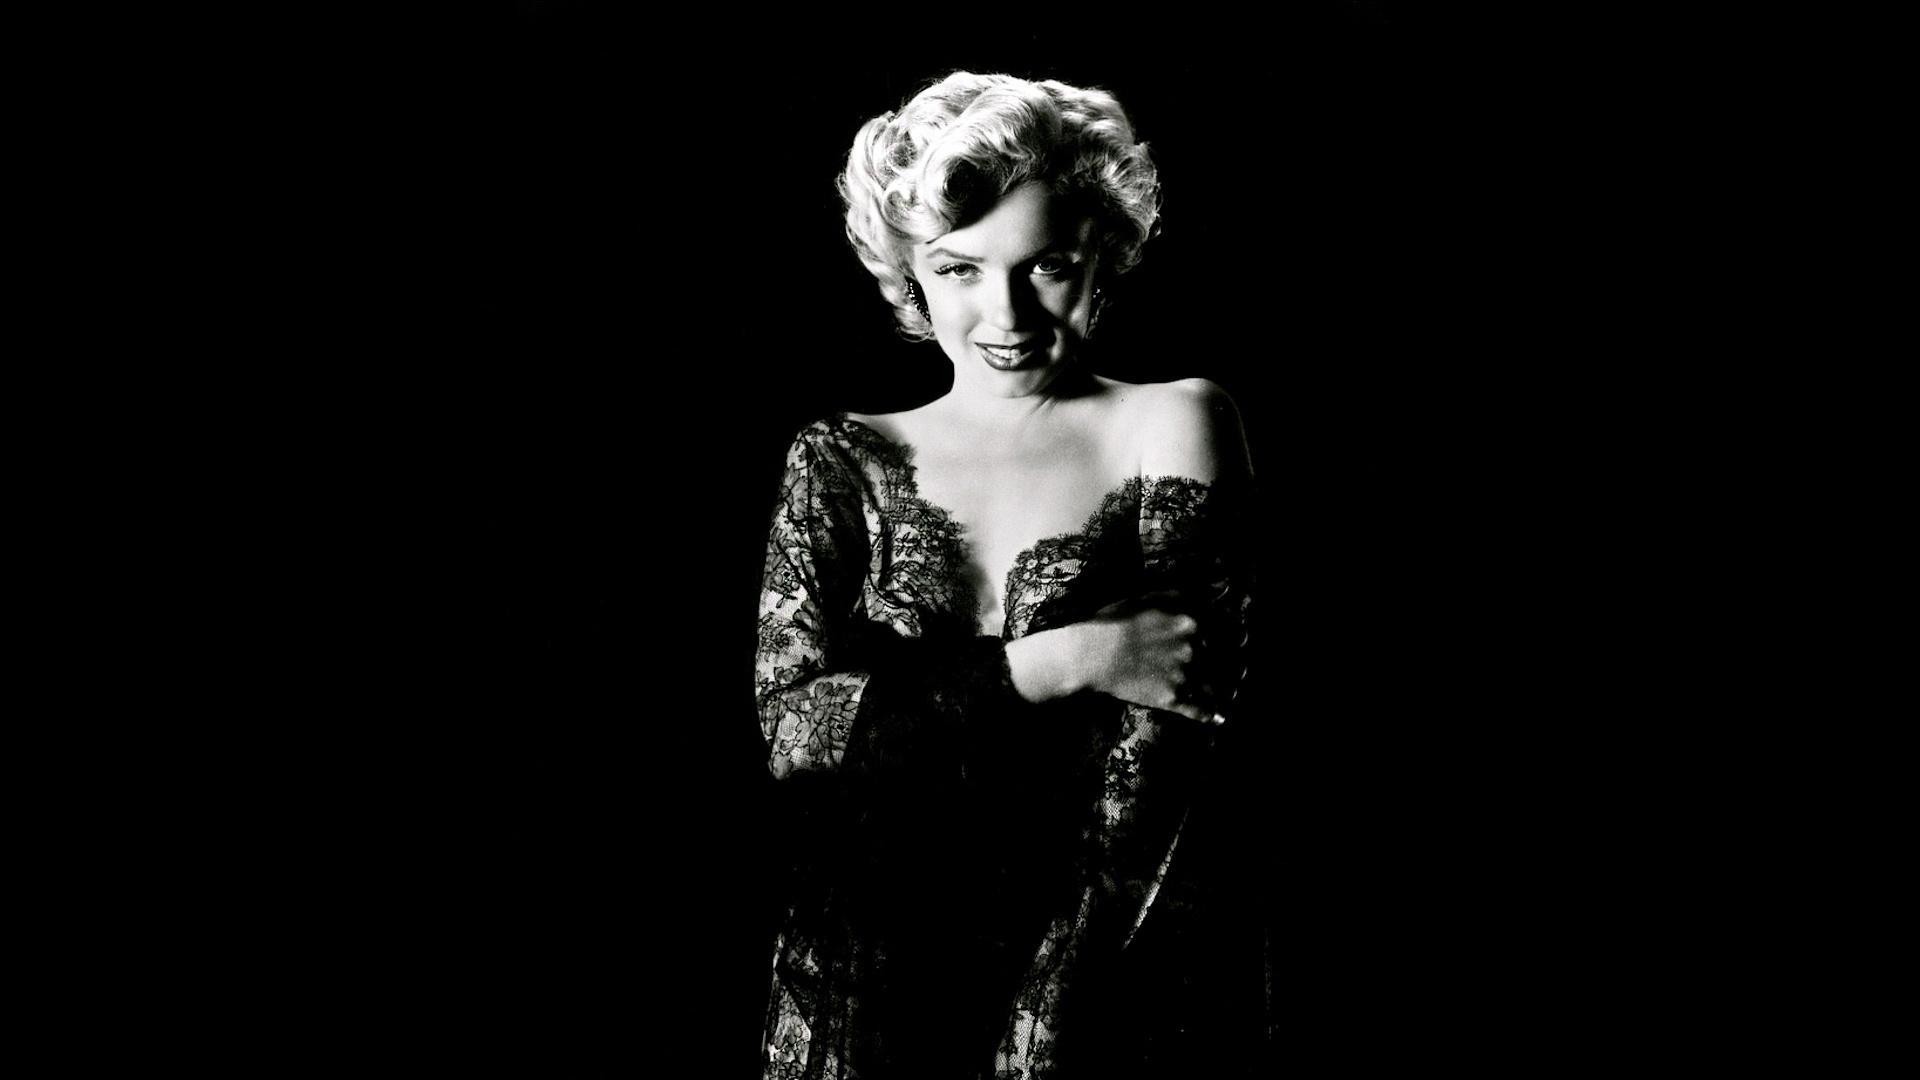 Fond Ecran Celebrite Marilyn Monroe Noir Et Blanc Wallpaper HD Black